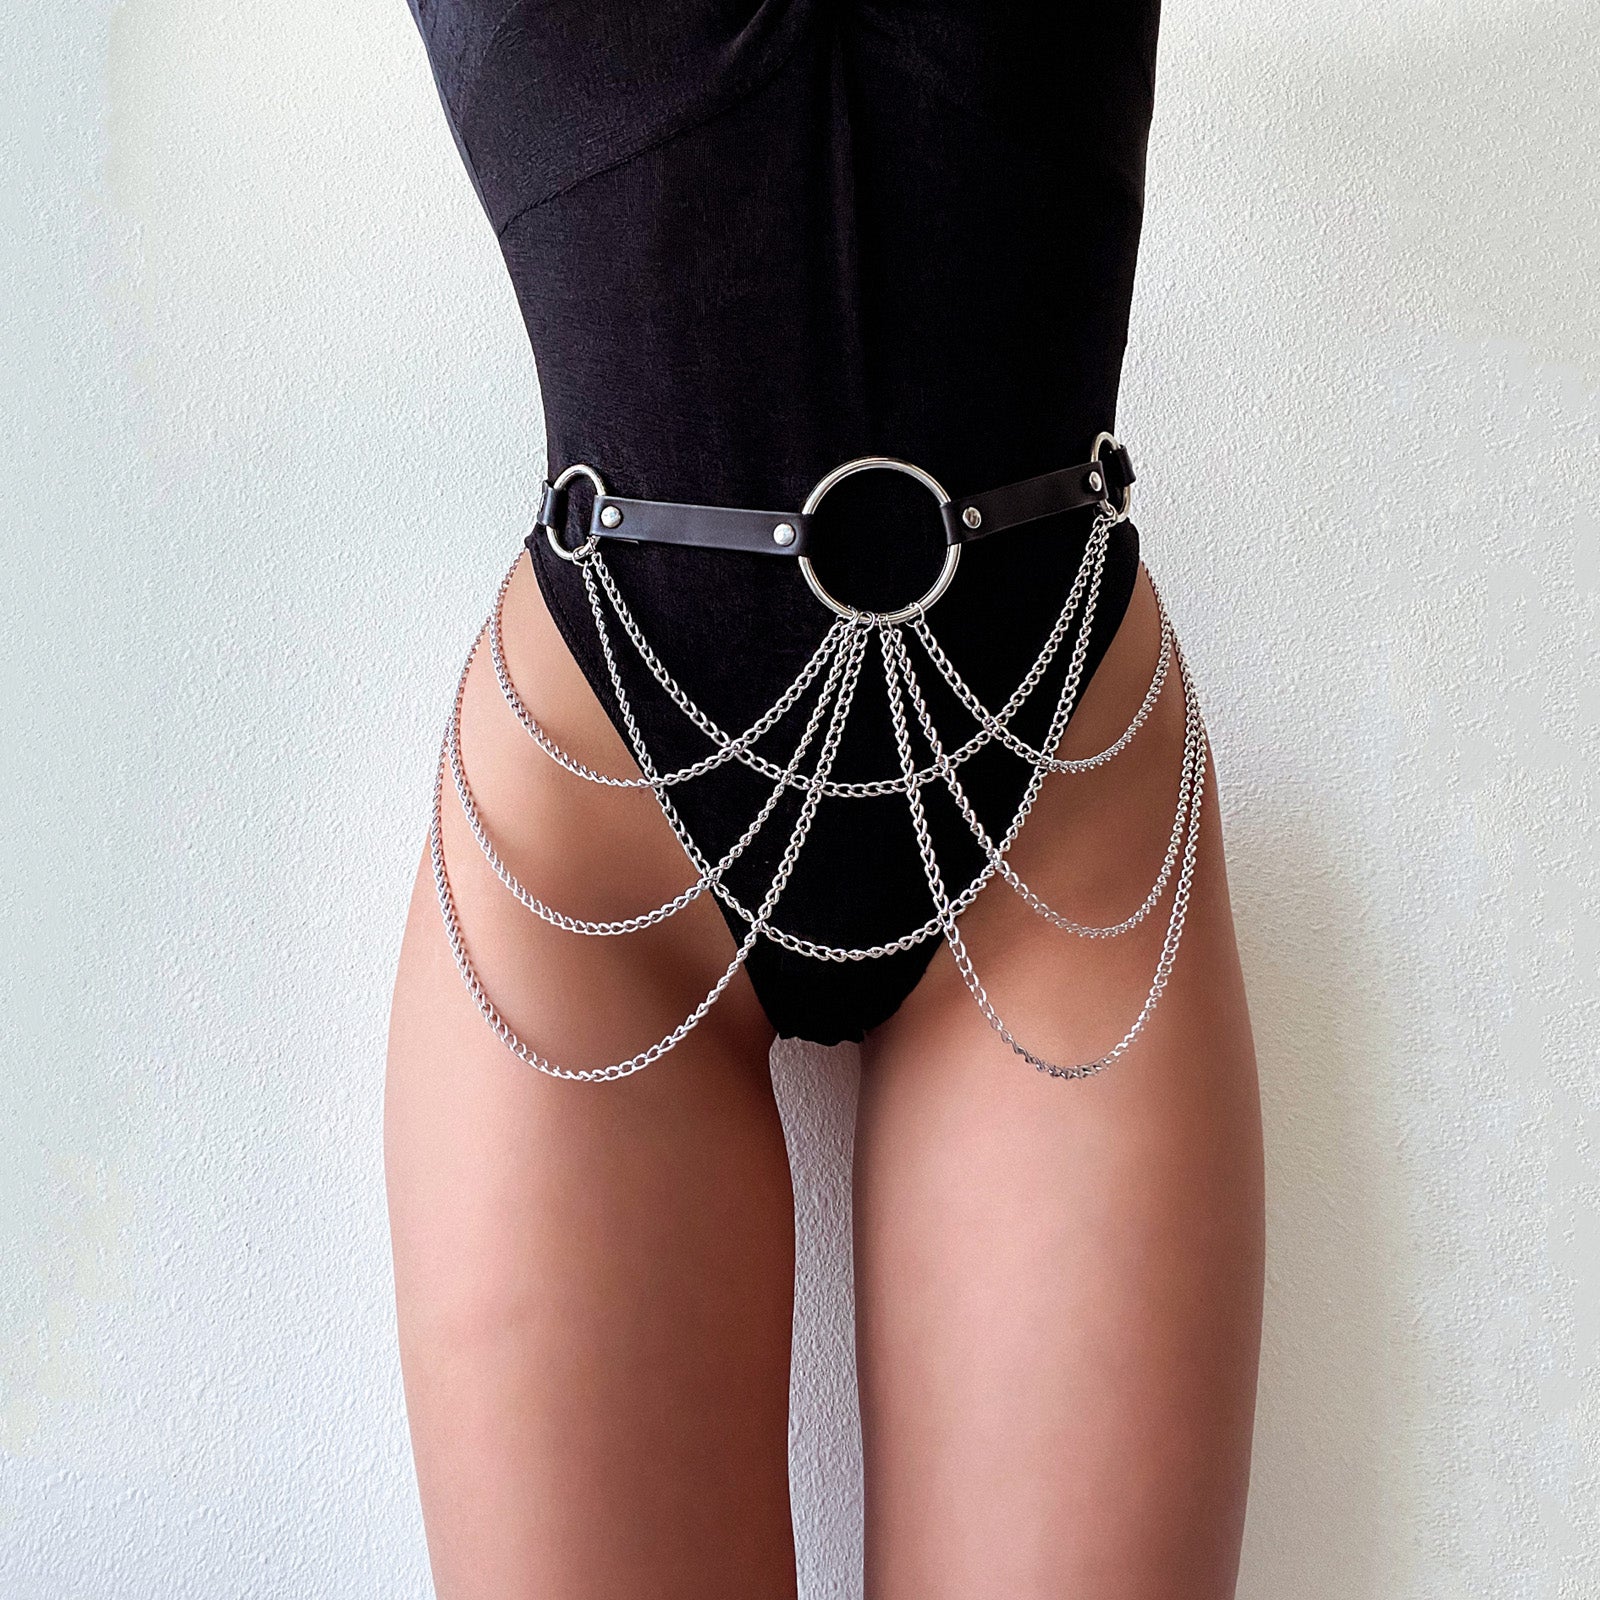 'LINA' - Body Belt Chains